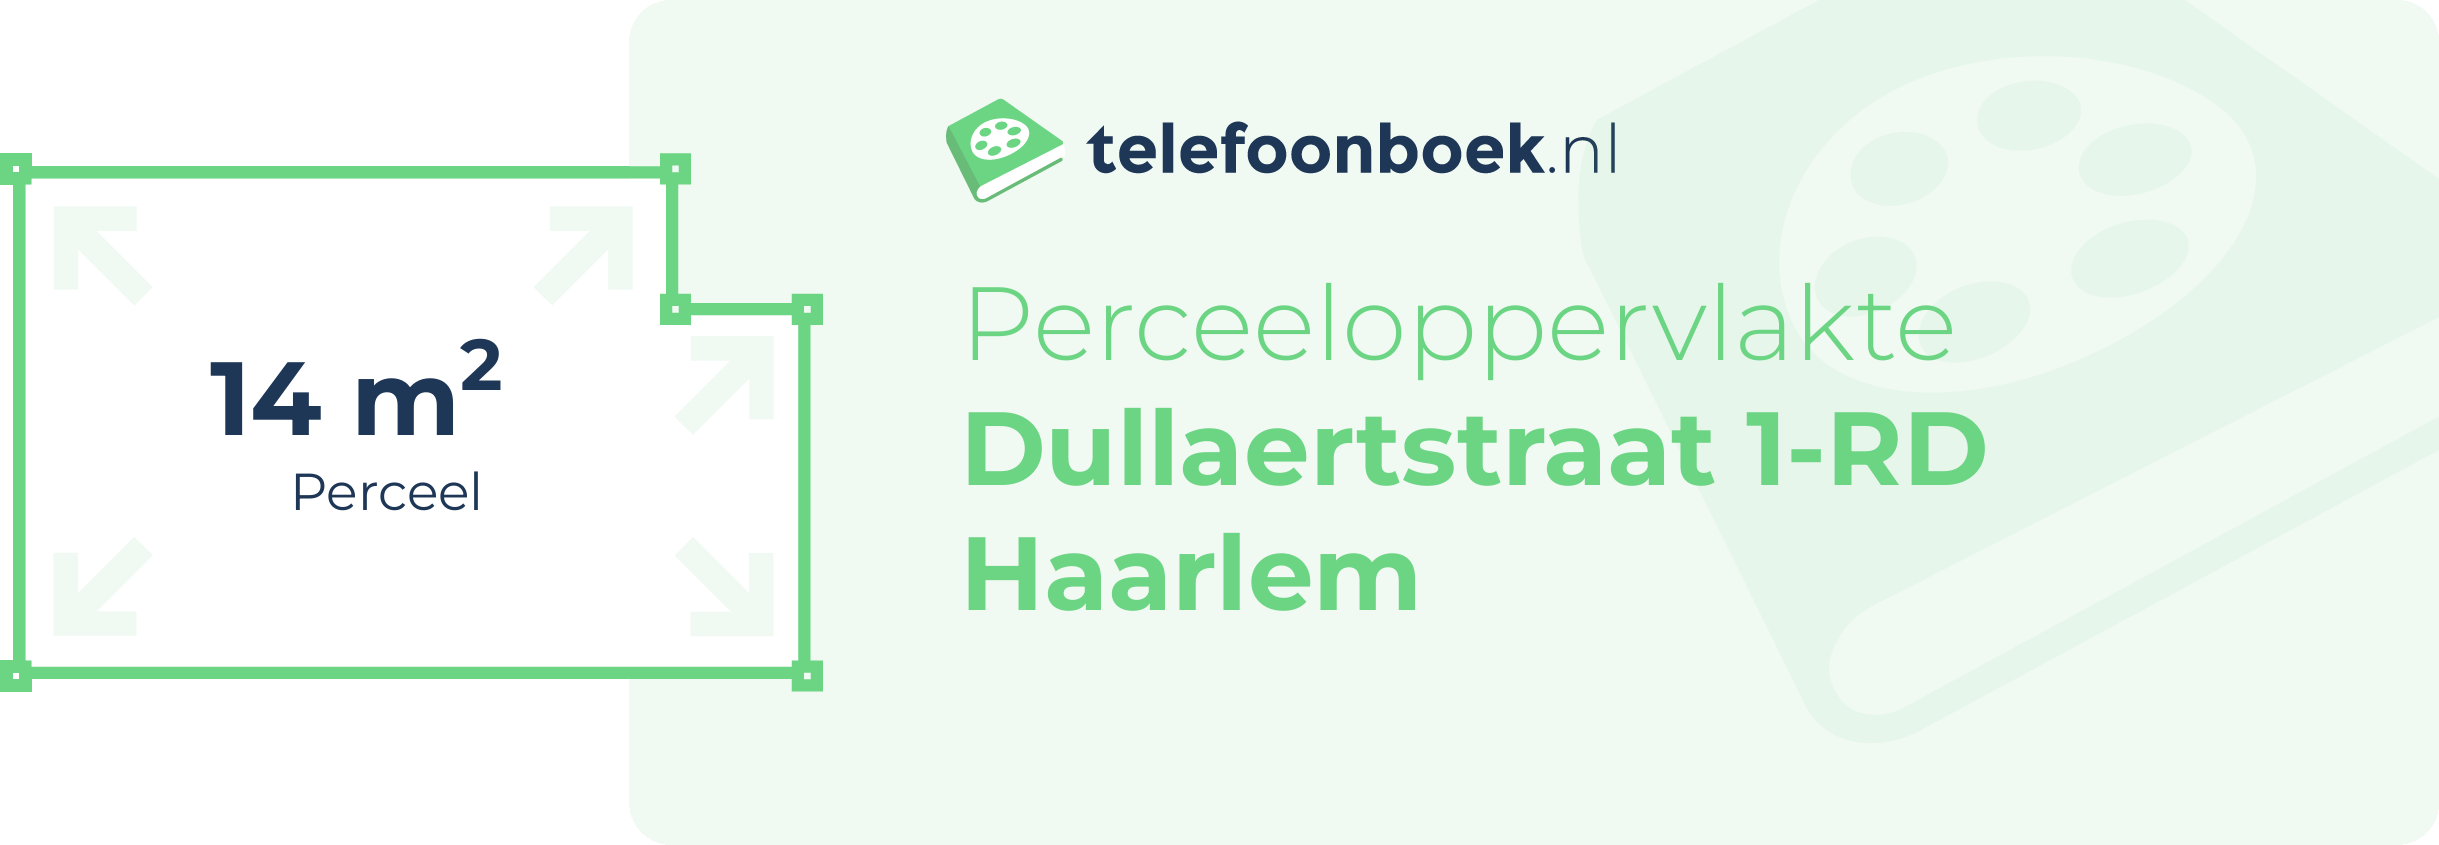 Perceeloppervlakte Dullaertstraat 1-RD Haarlem